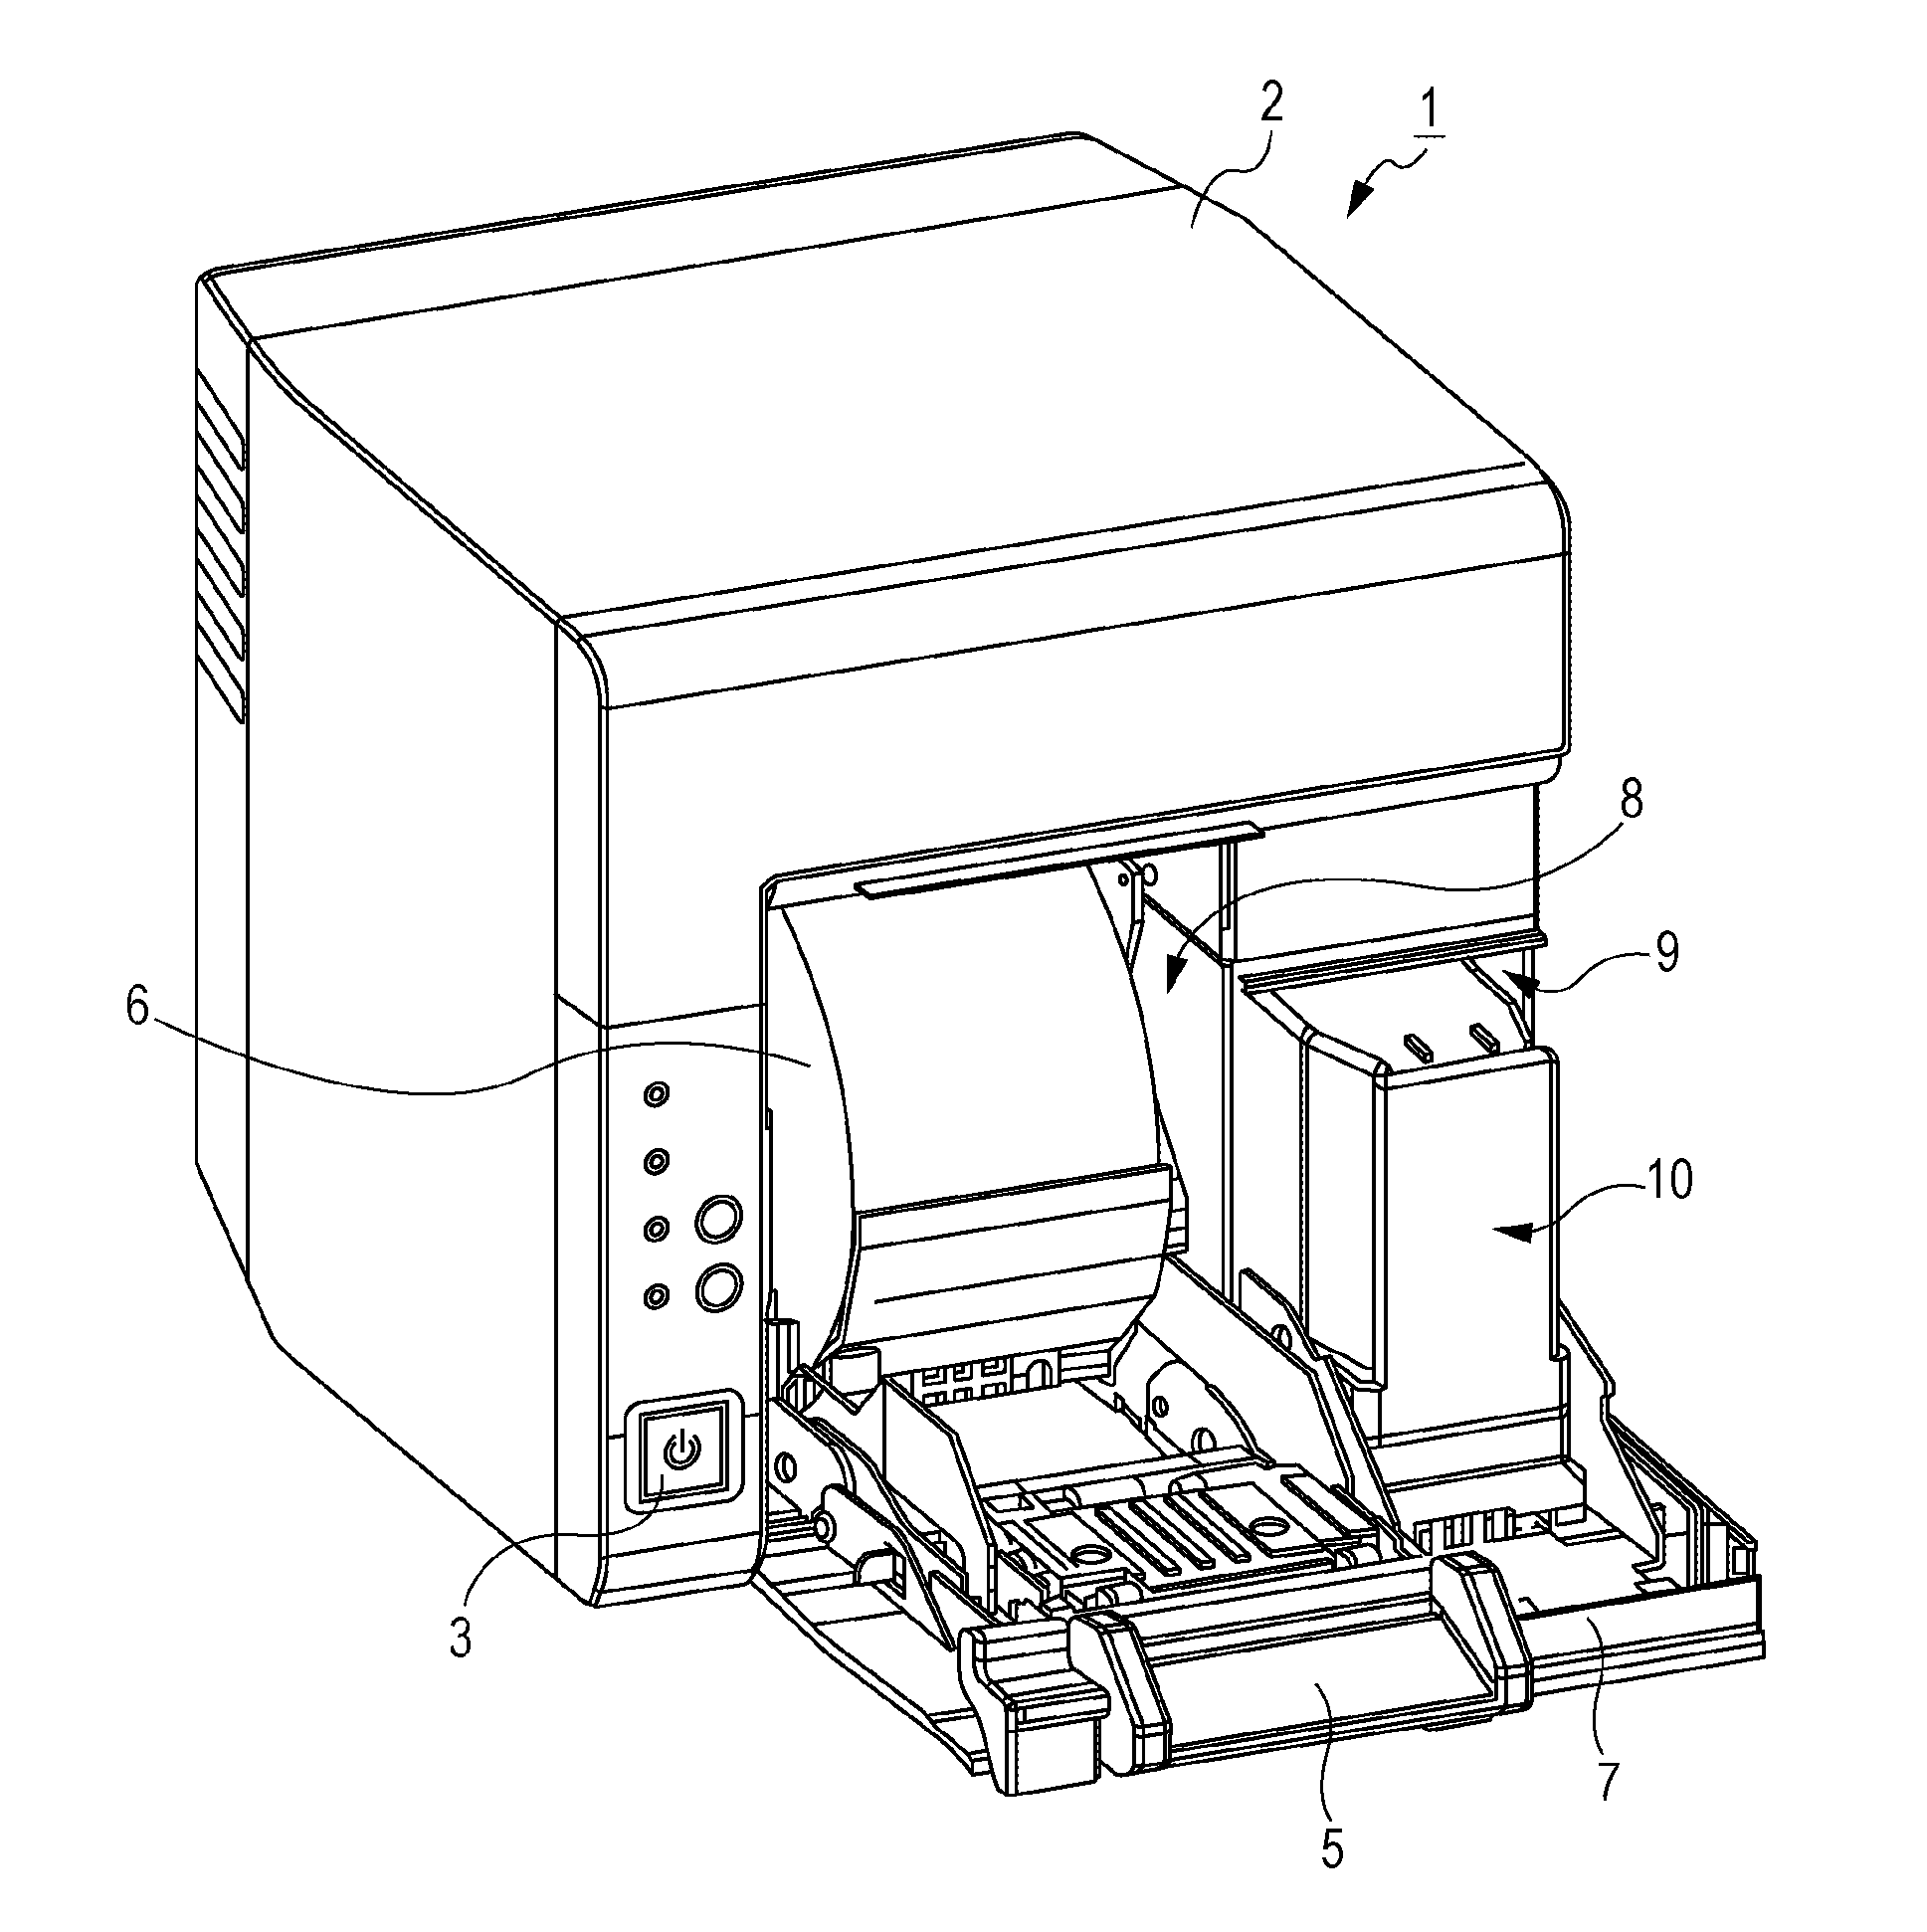 Liquid absorbent and printer